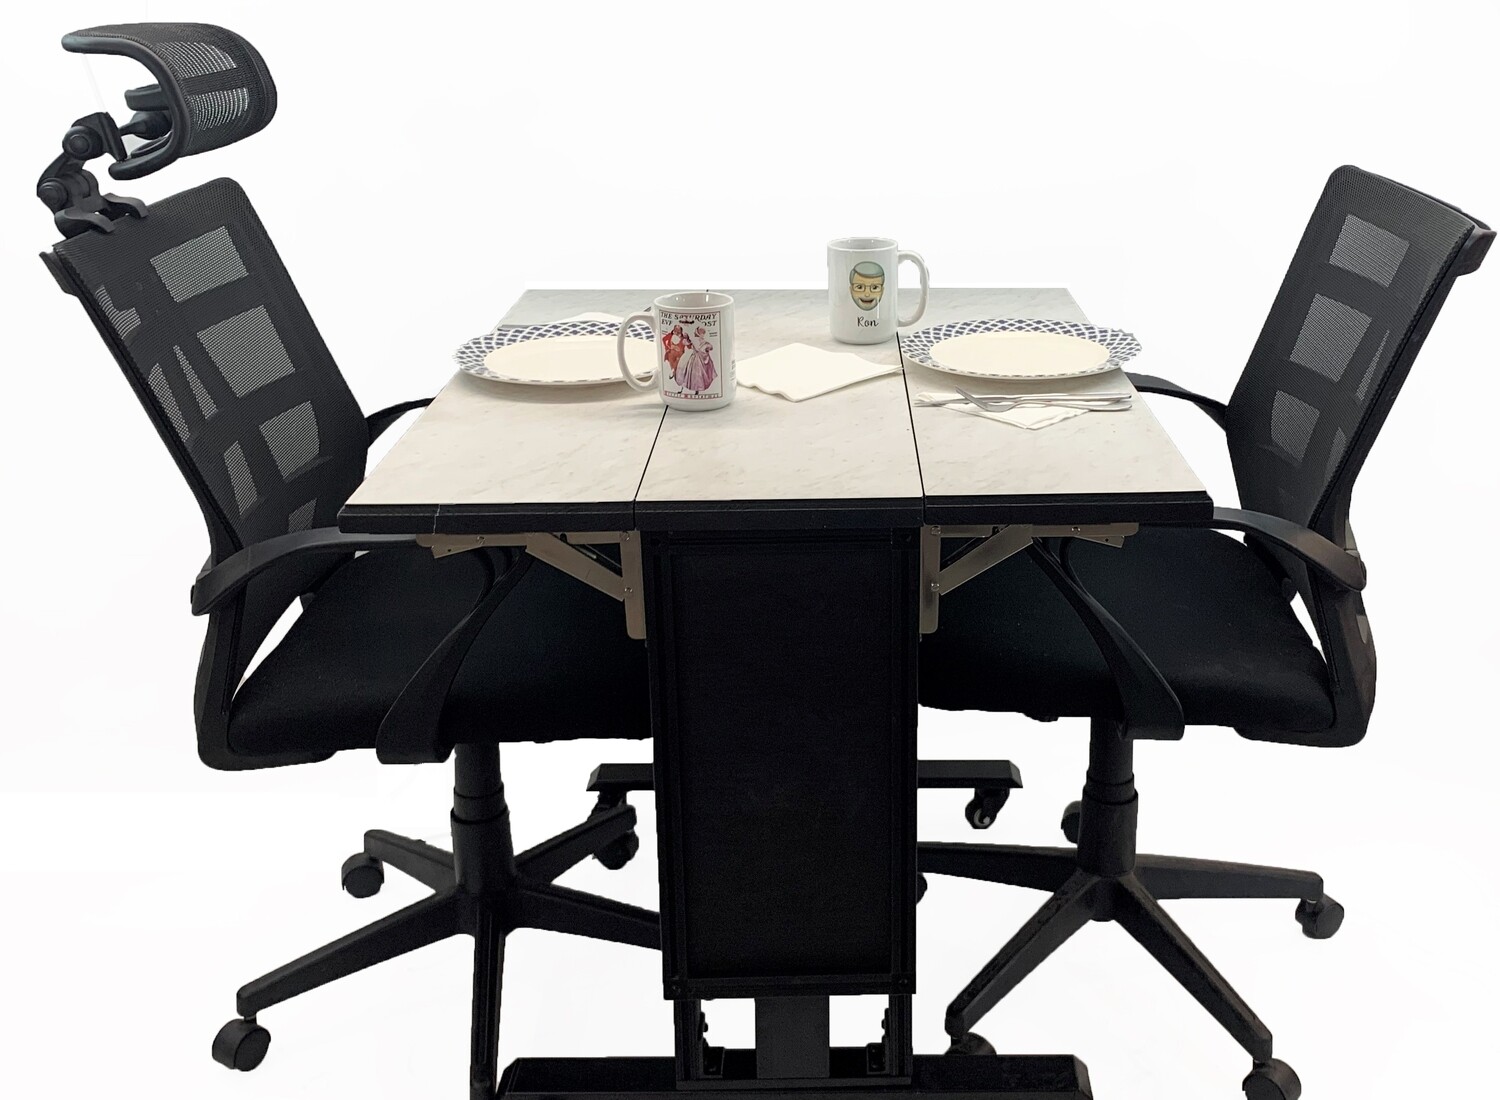 Dinette/Desk Combination
TABLE REPLACEMENT MODEL